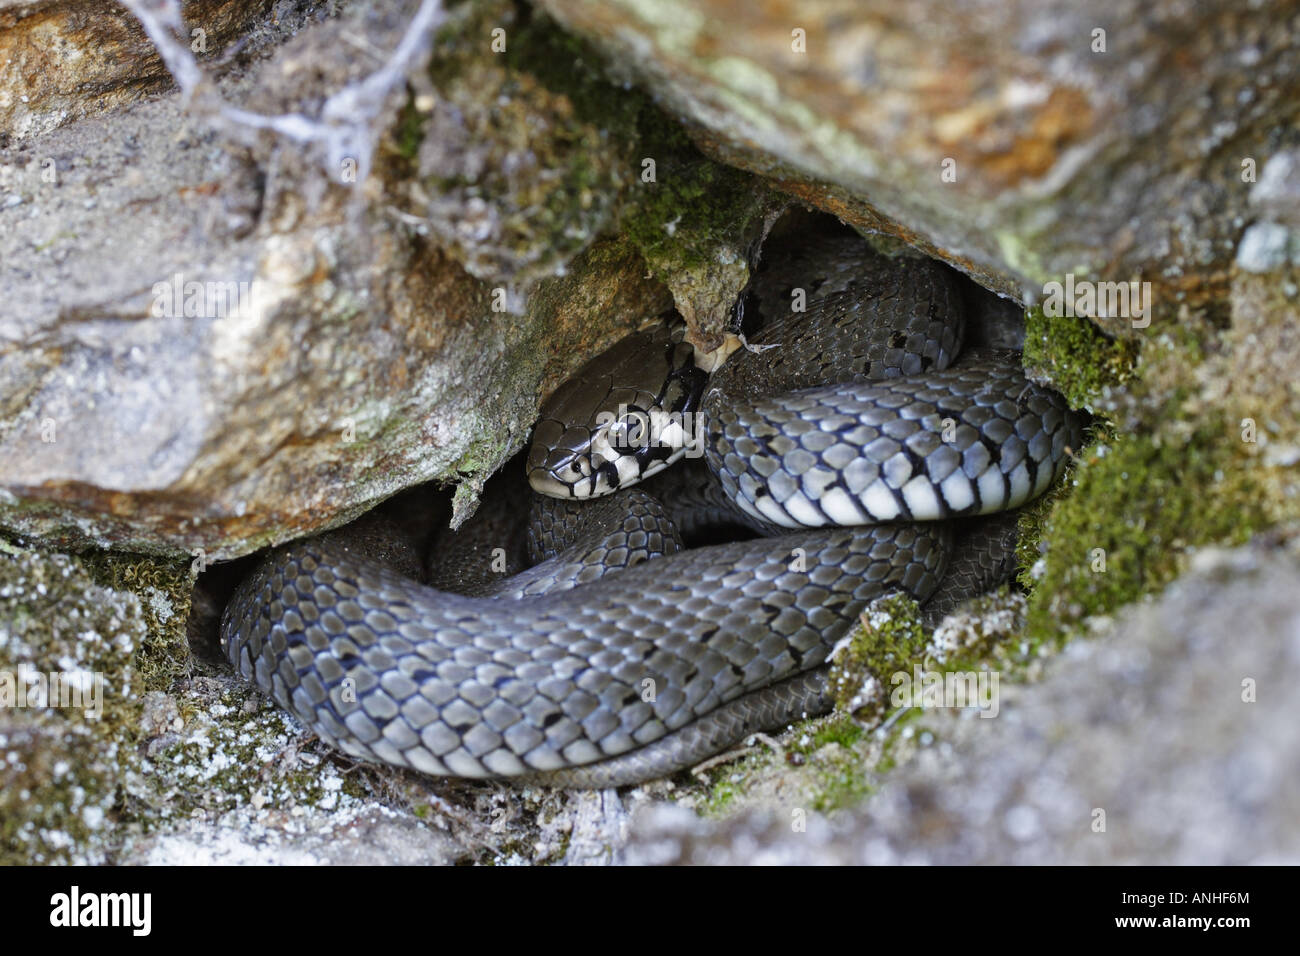 Ringelnatter natrix natrix Schlange snake natter Stock Photo - Alamy